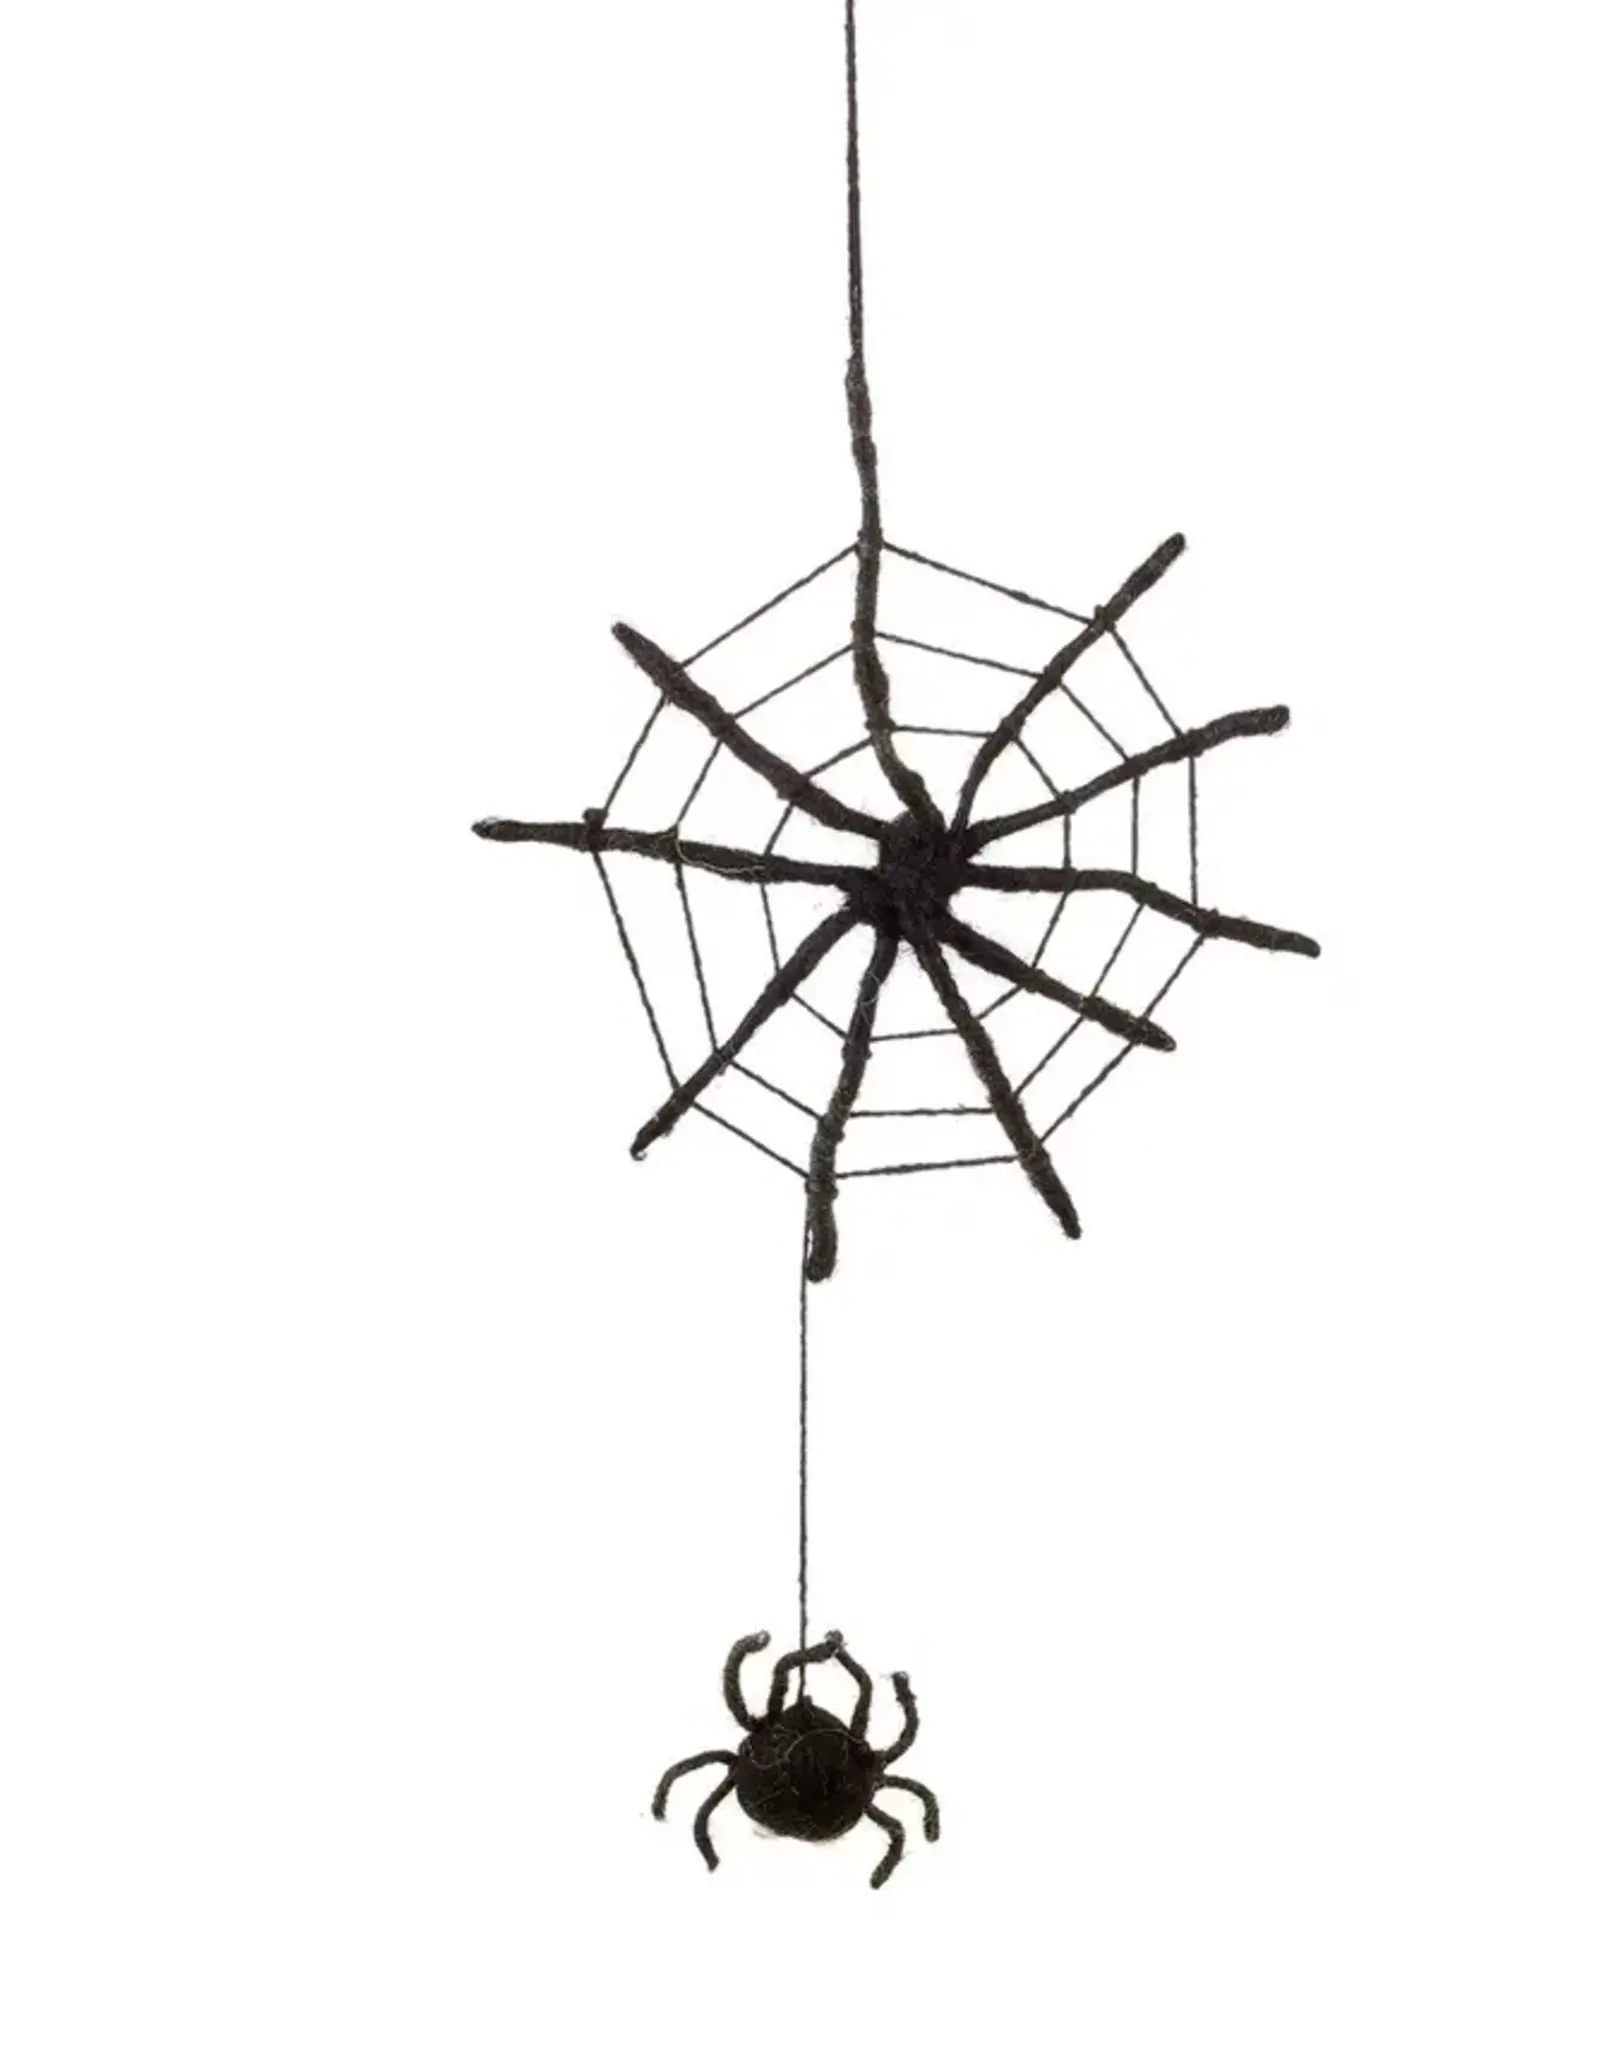 Felt So Good Spooky Halloween Spiderweb Ornament